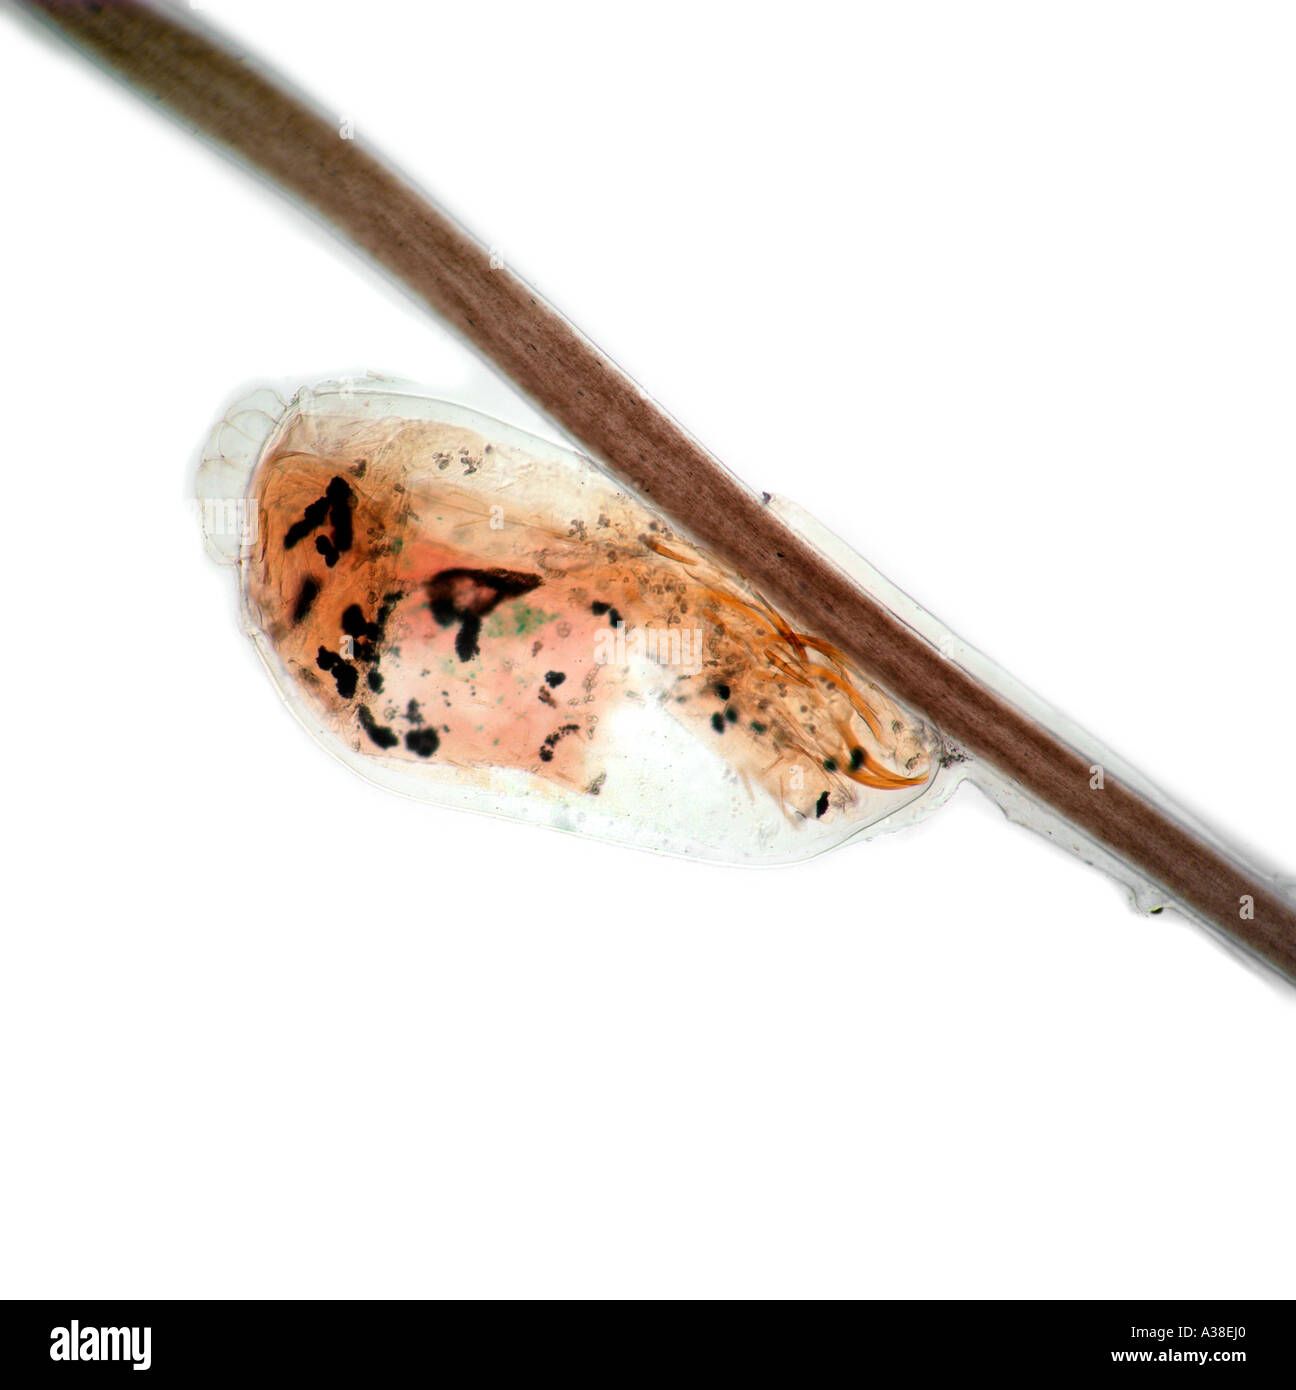 Sviluppo di testa umana pidocchio uovo sulla ciocca di capelli Pediculus capitis de Geer Foto Stock